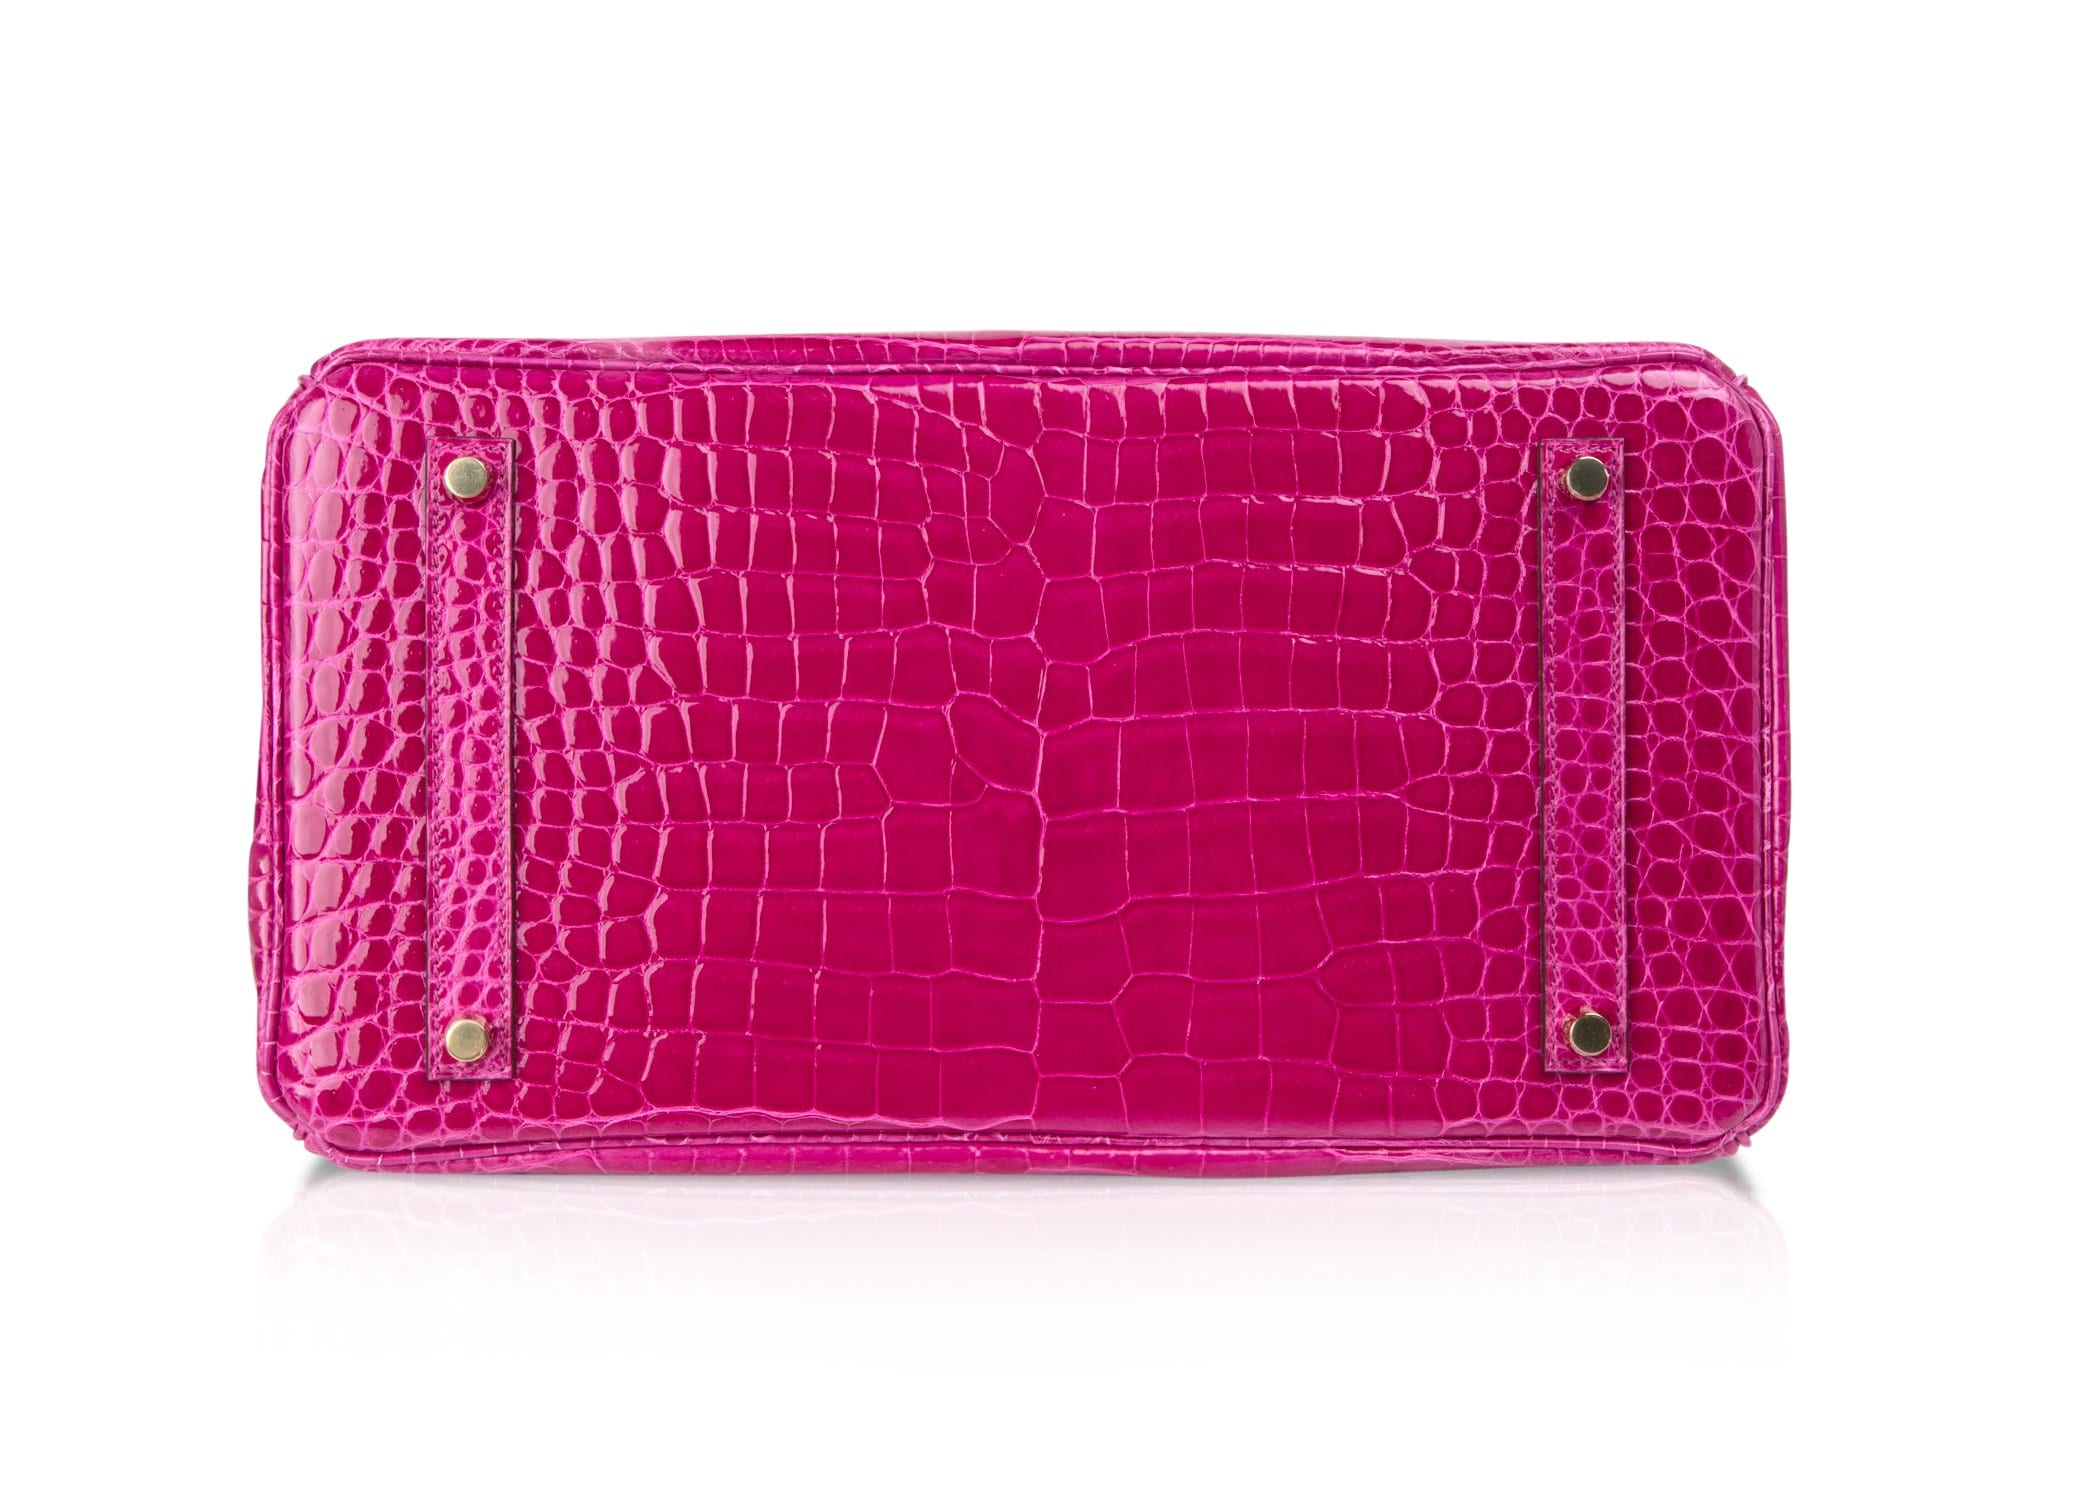 Hermes Birkin 35 Bag Pink Rose Scheherazade Porosus Crocodile Gold Hardware - mightychic